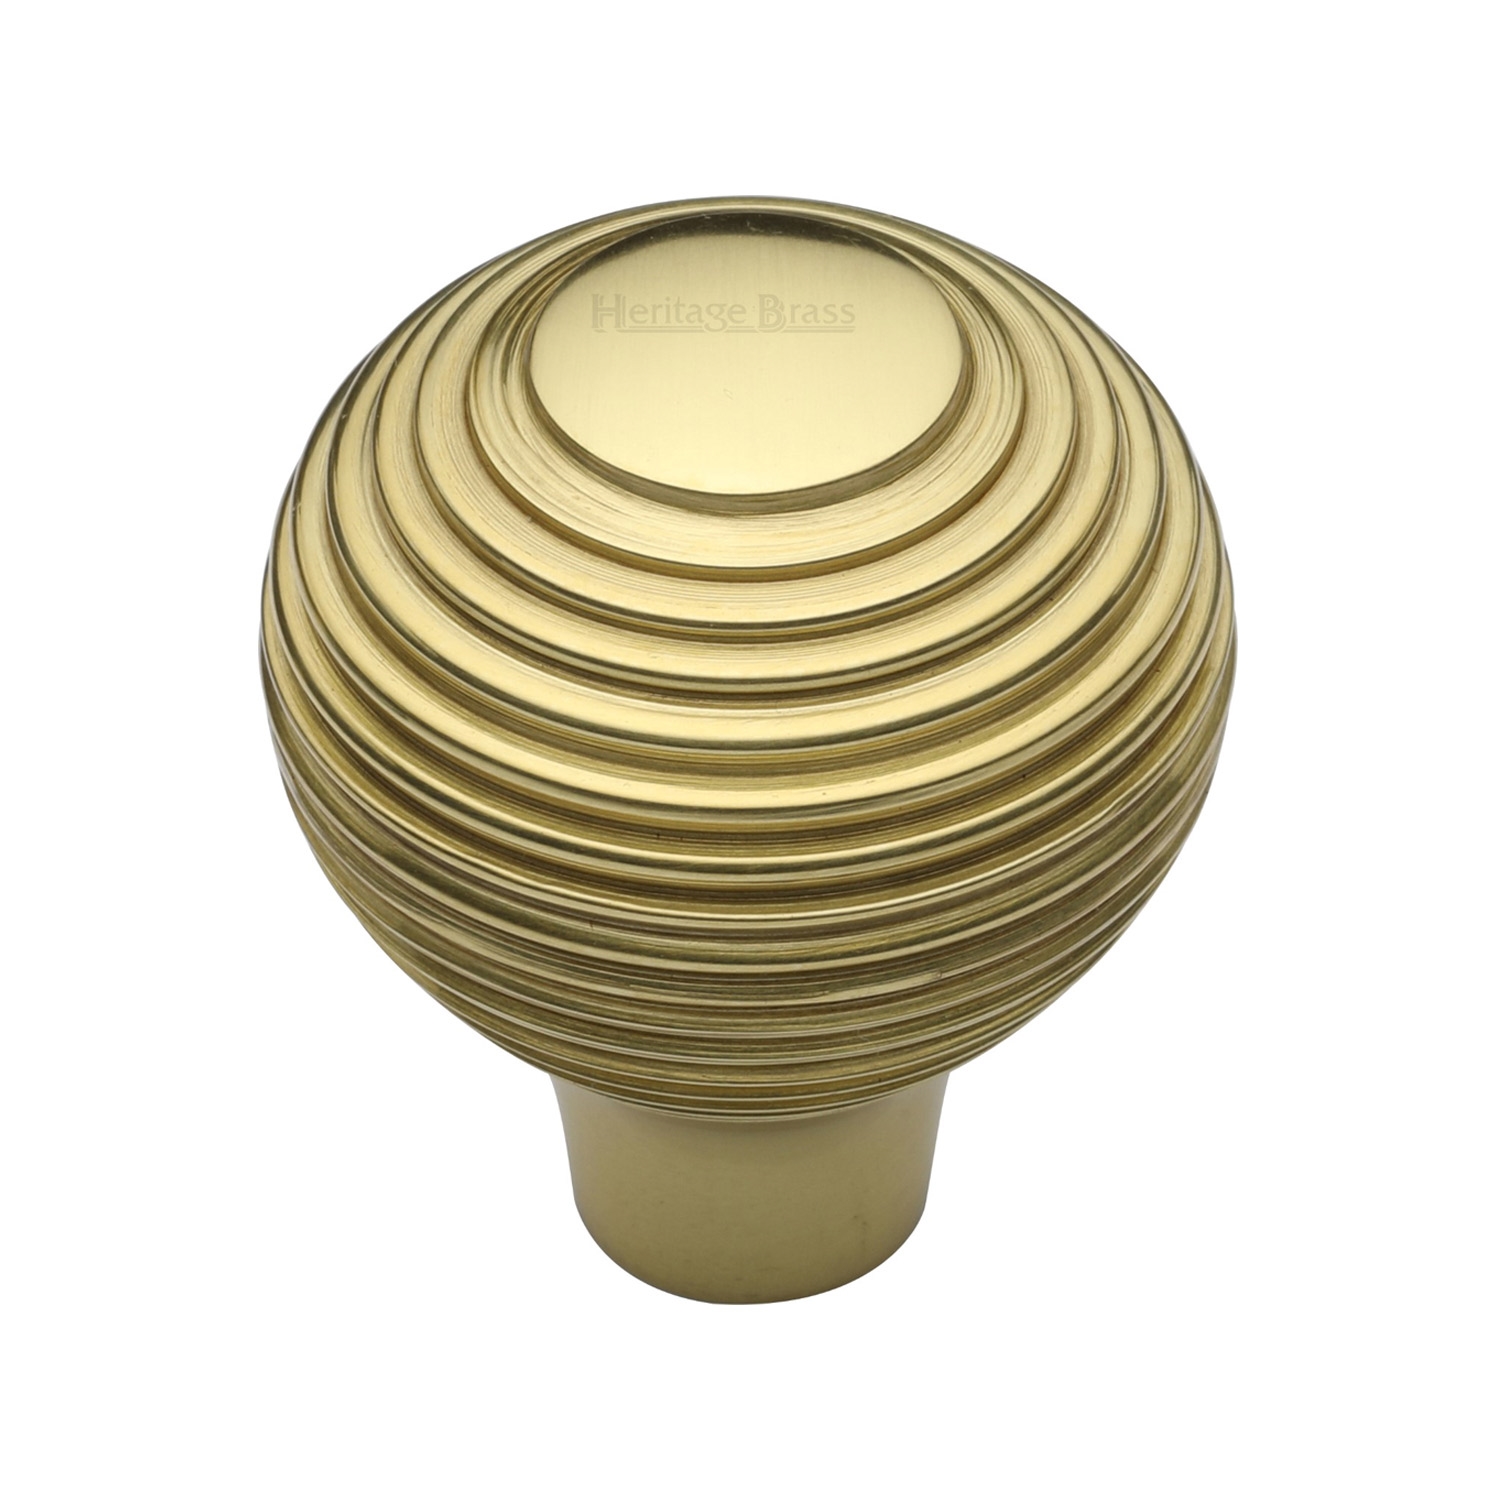 Heritage Brass Cabinet Knob Reeded Design 32mm